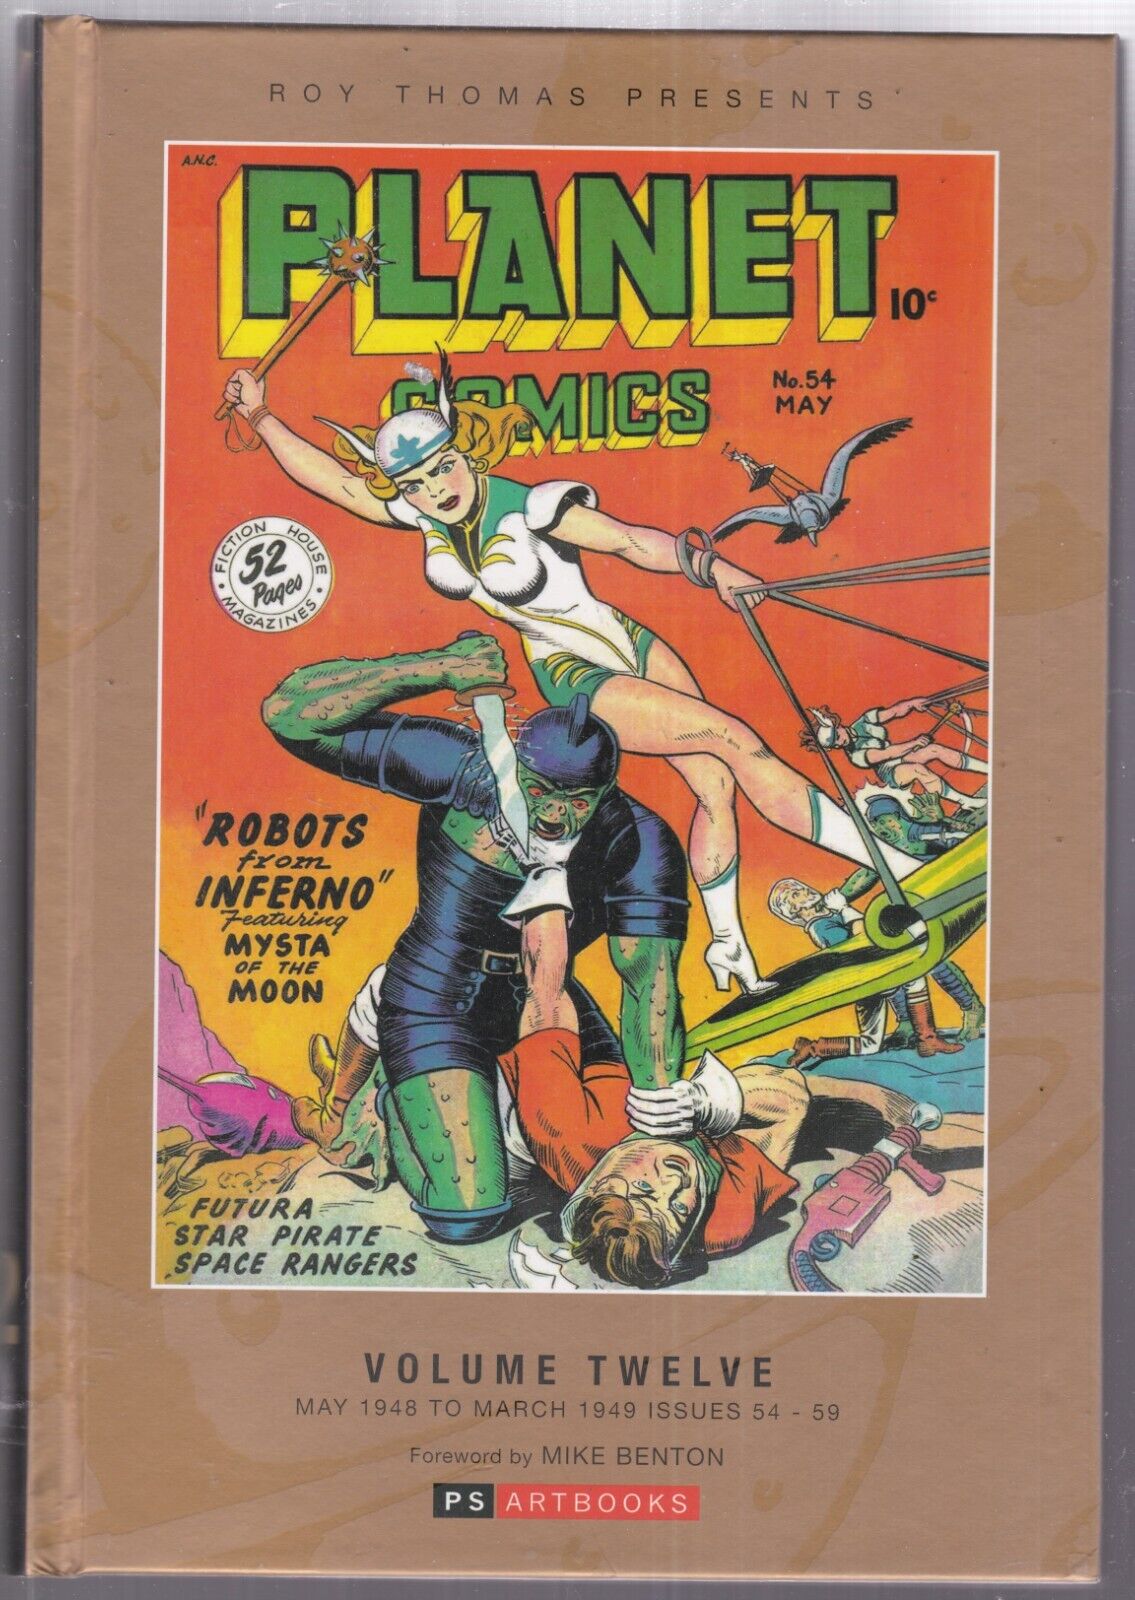 Planet Comics:  Vol 12:  PS Artbooks  VF/NM (9.0)